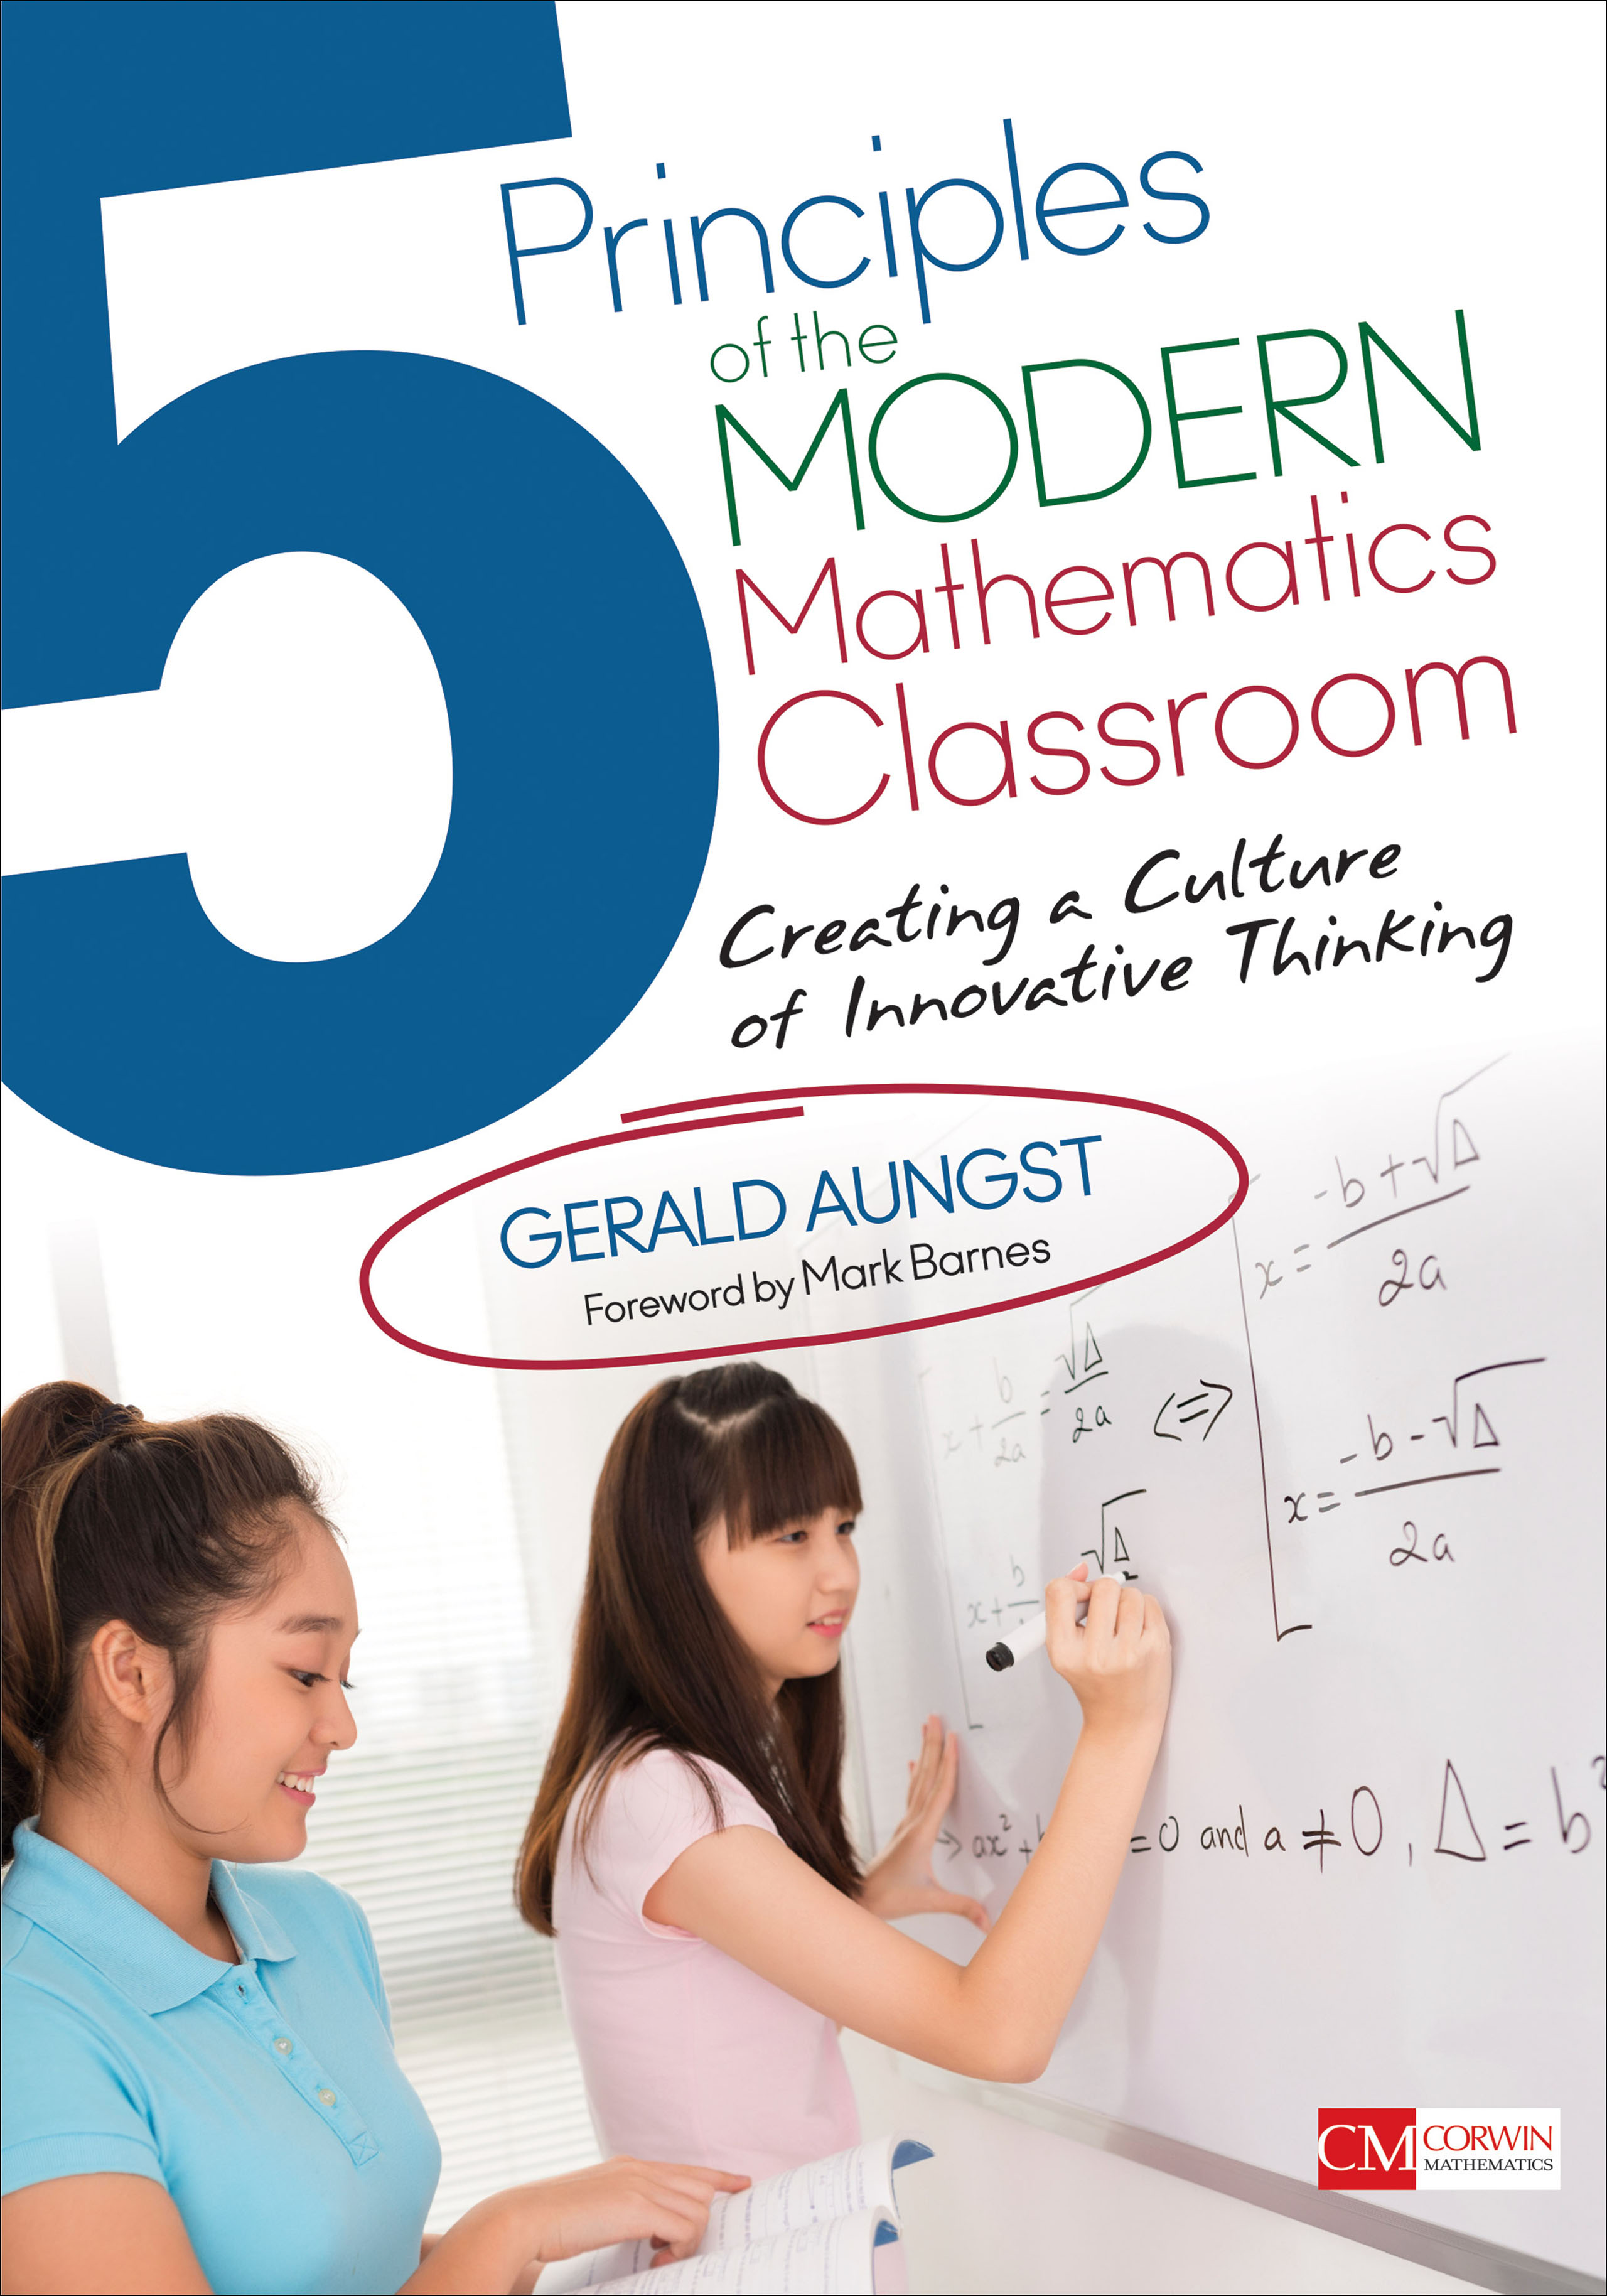 Optimise students book. Modern Math Classroom. 5 Principle. Modern Math class. Classroom Mathematics.